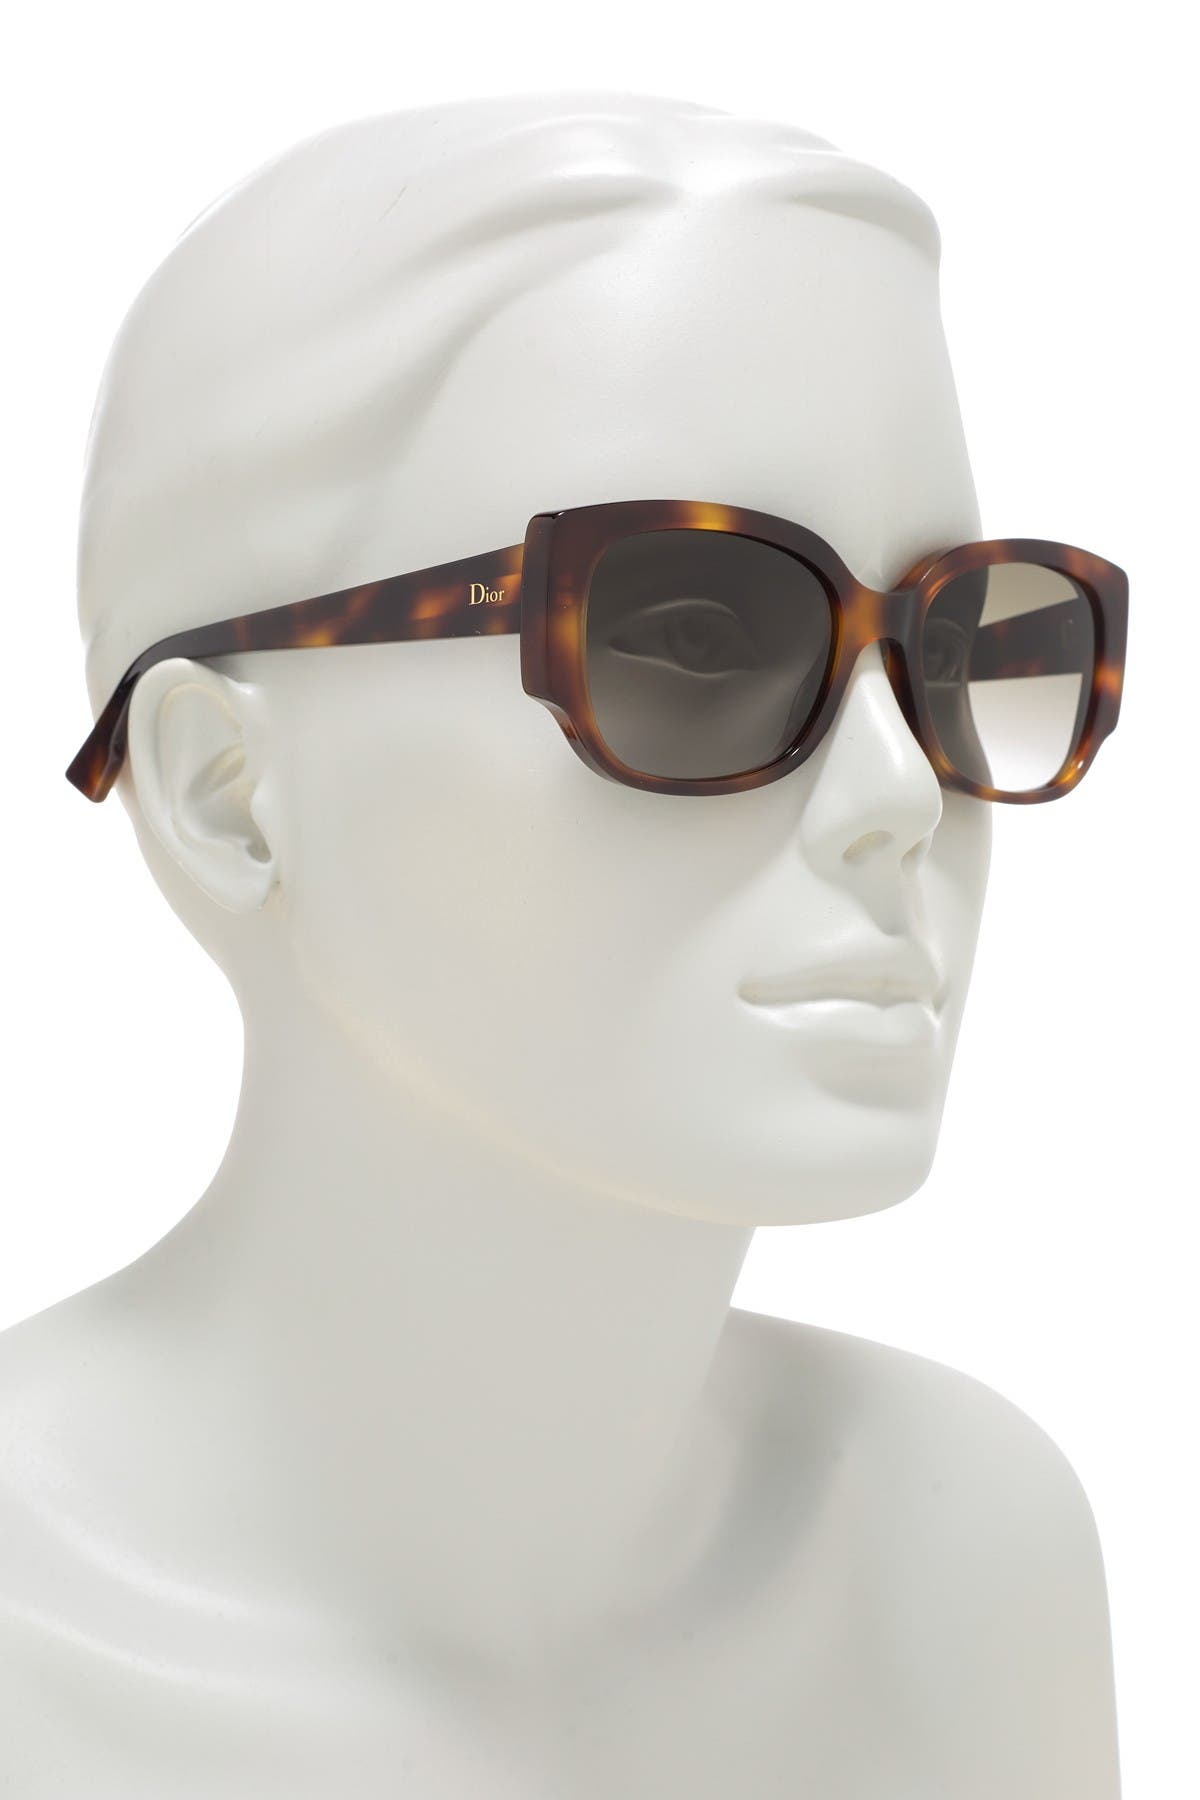 dior night sunglasses